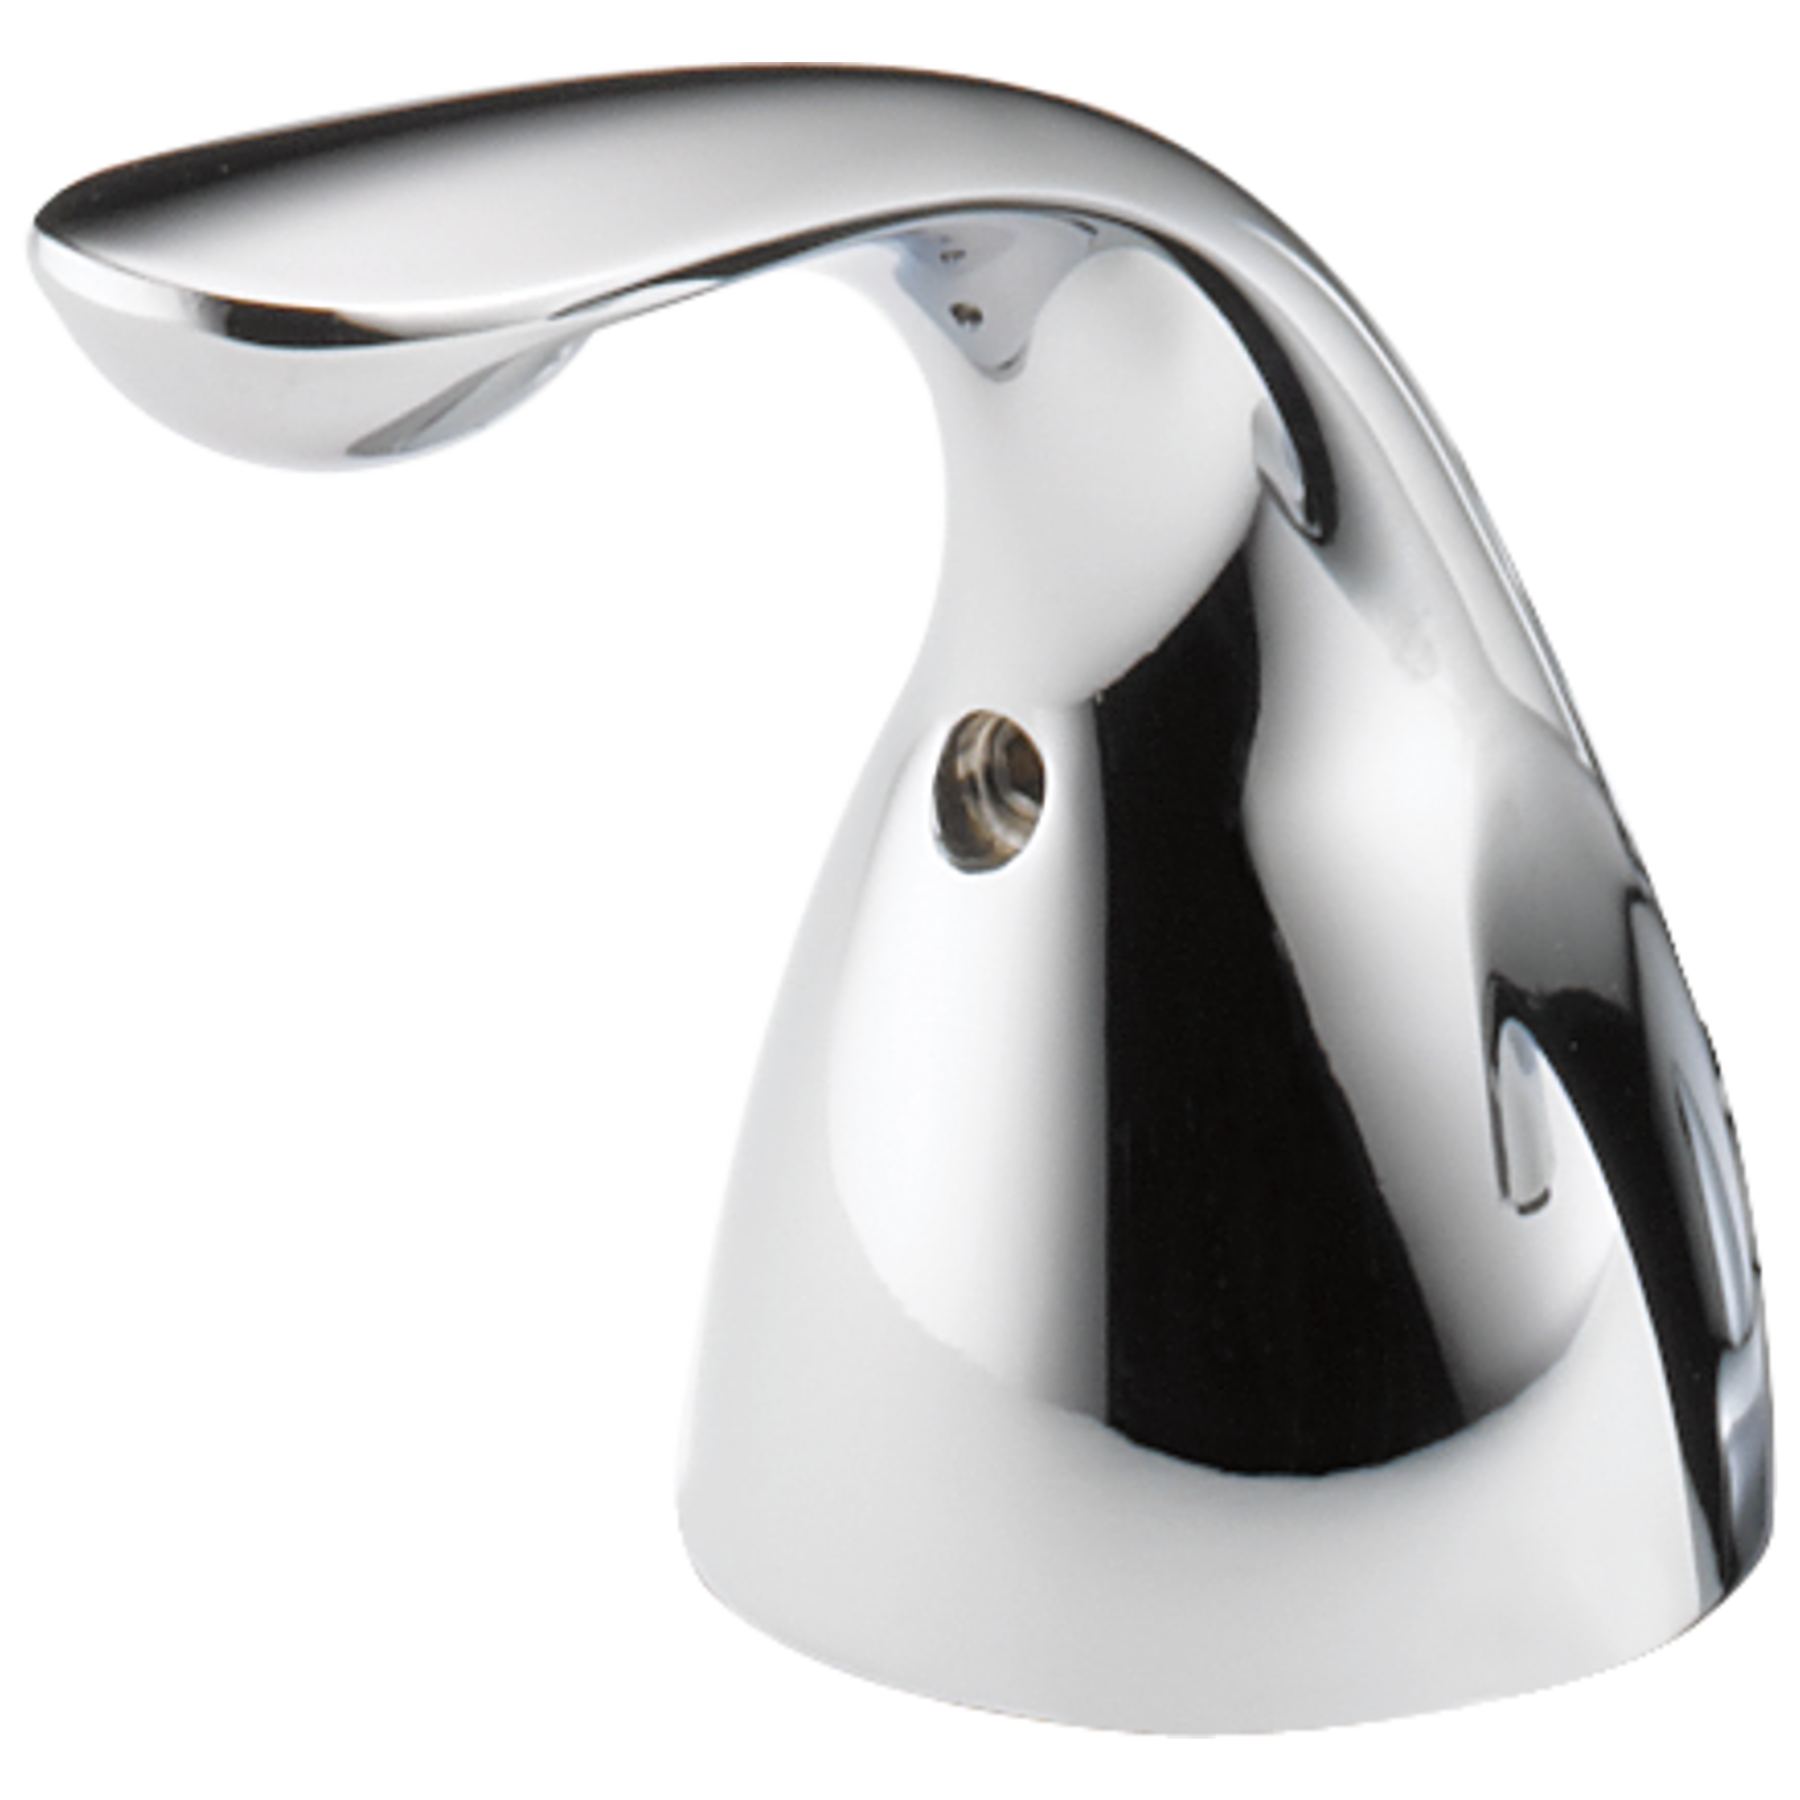 Set Chrome Handle Bidet | Bathroom Faucet RP64364 - Delta in Lever or Metal